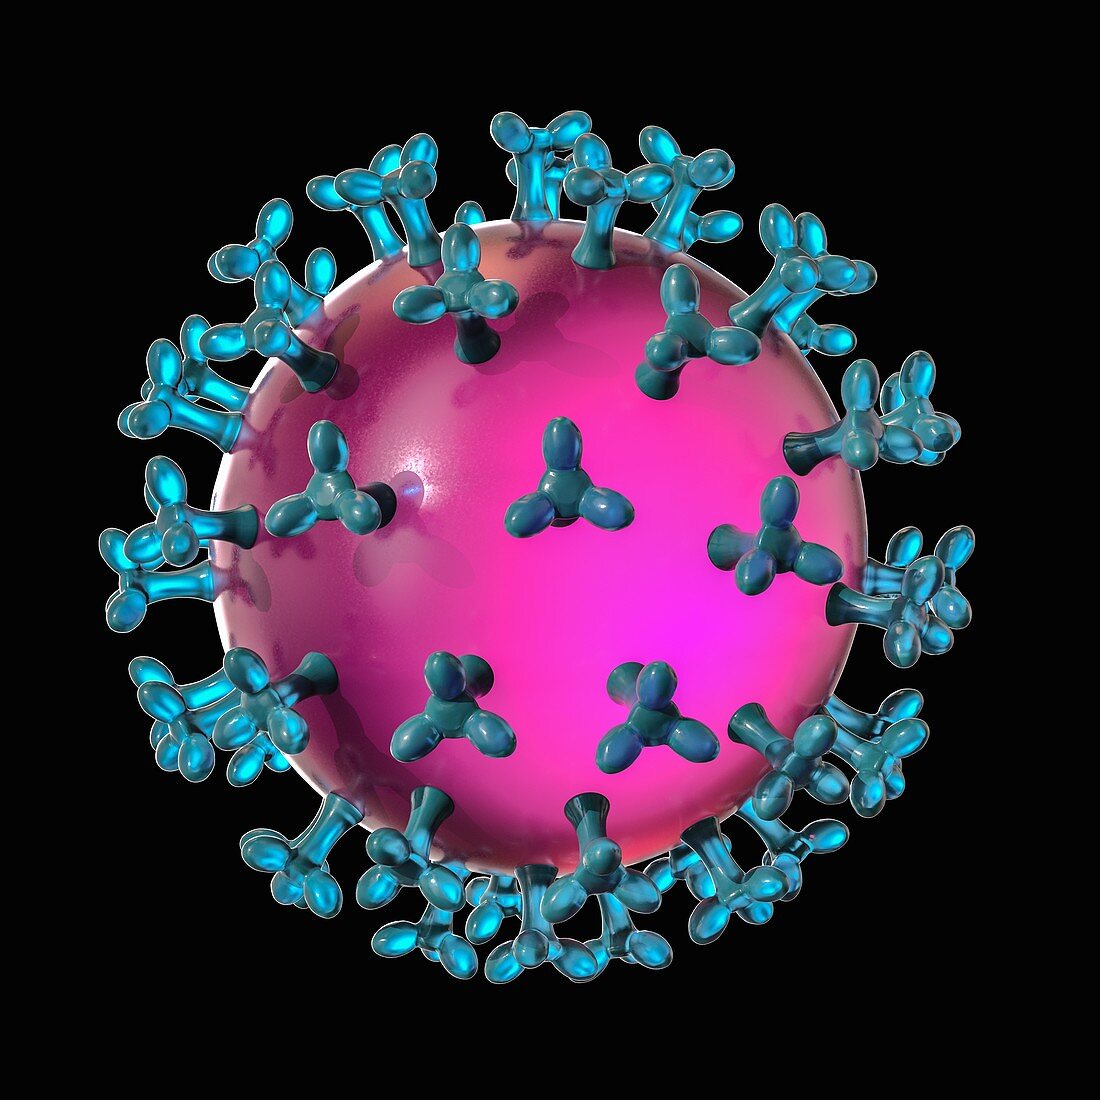 Coronavirus capsid, illustration